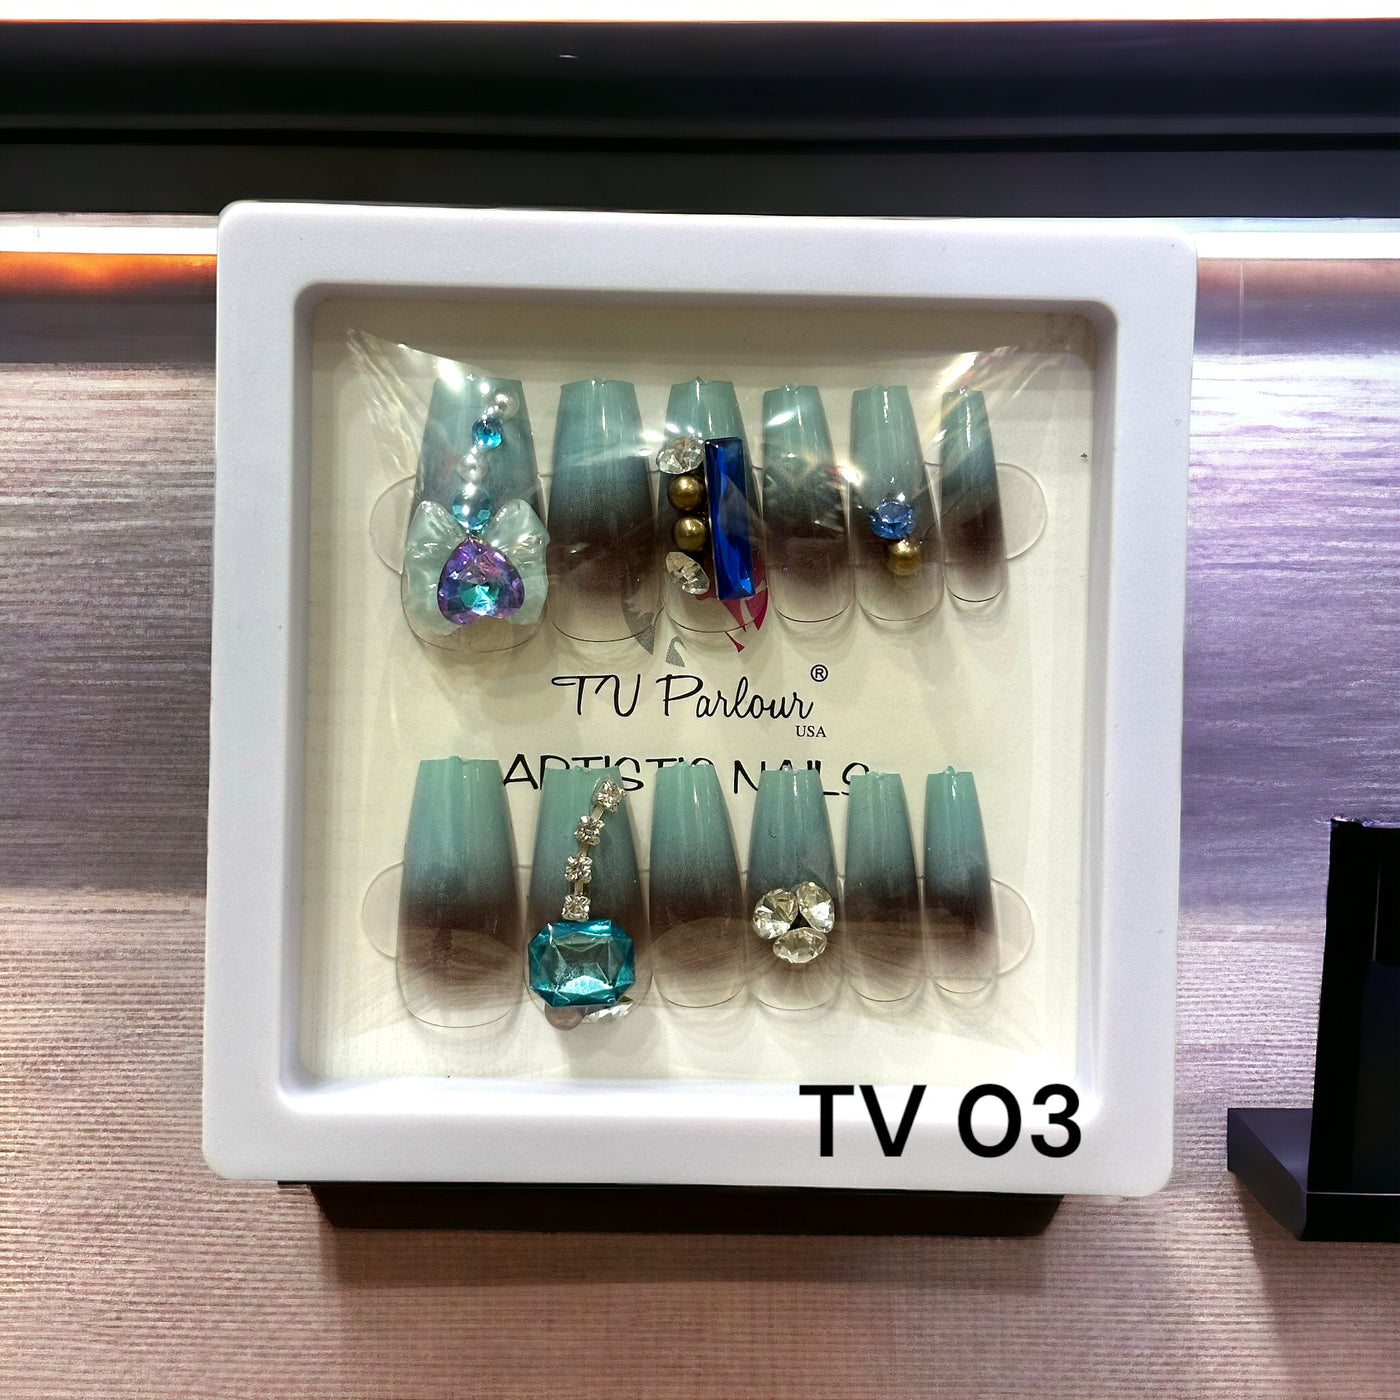 TV Parlour Artistic Nails Pack